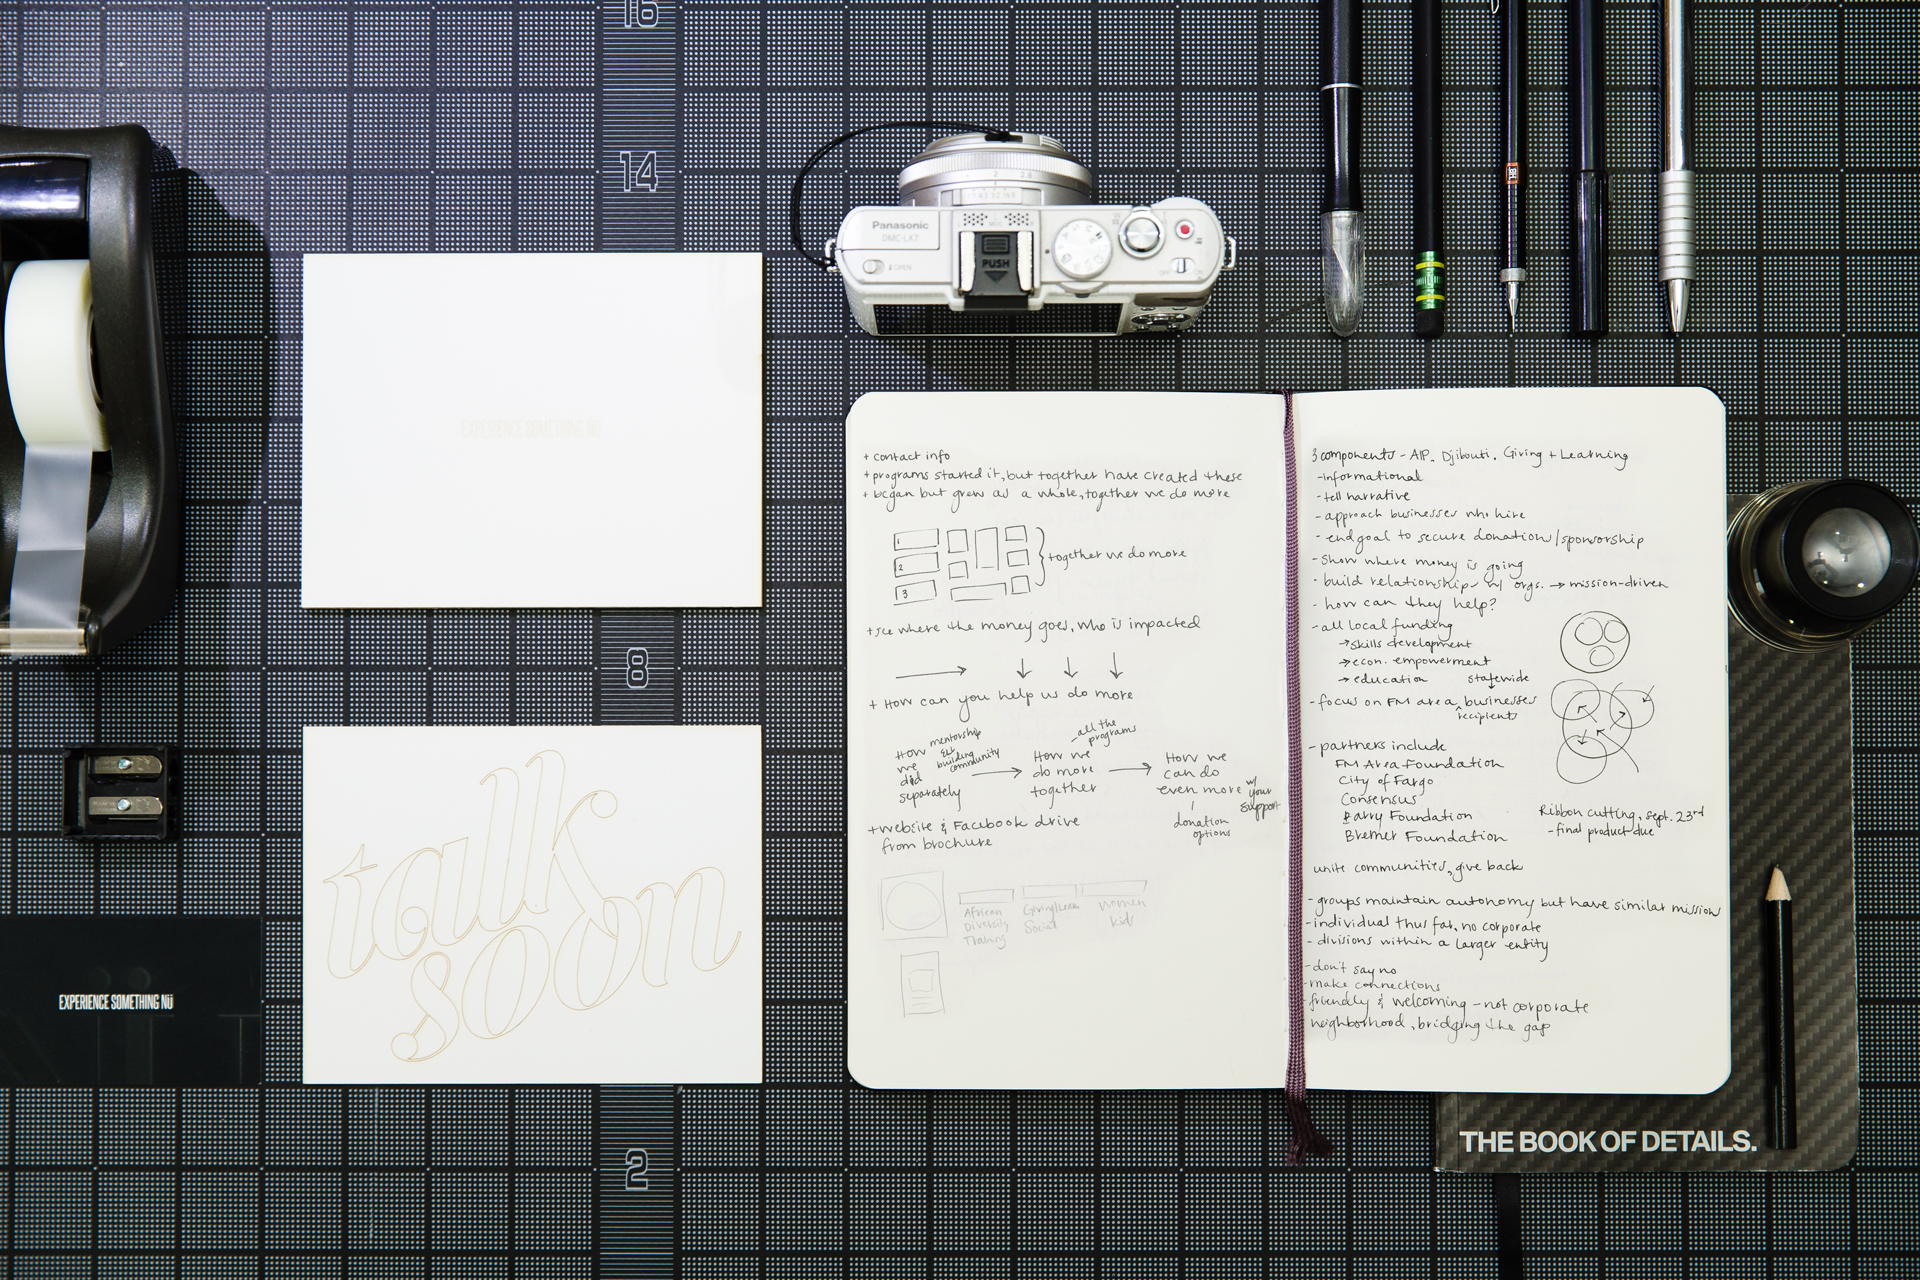 Open sketchbook full of sketches next to cards, tape dispenser, and pens on black gridded background